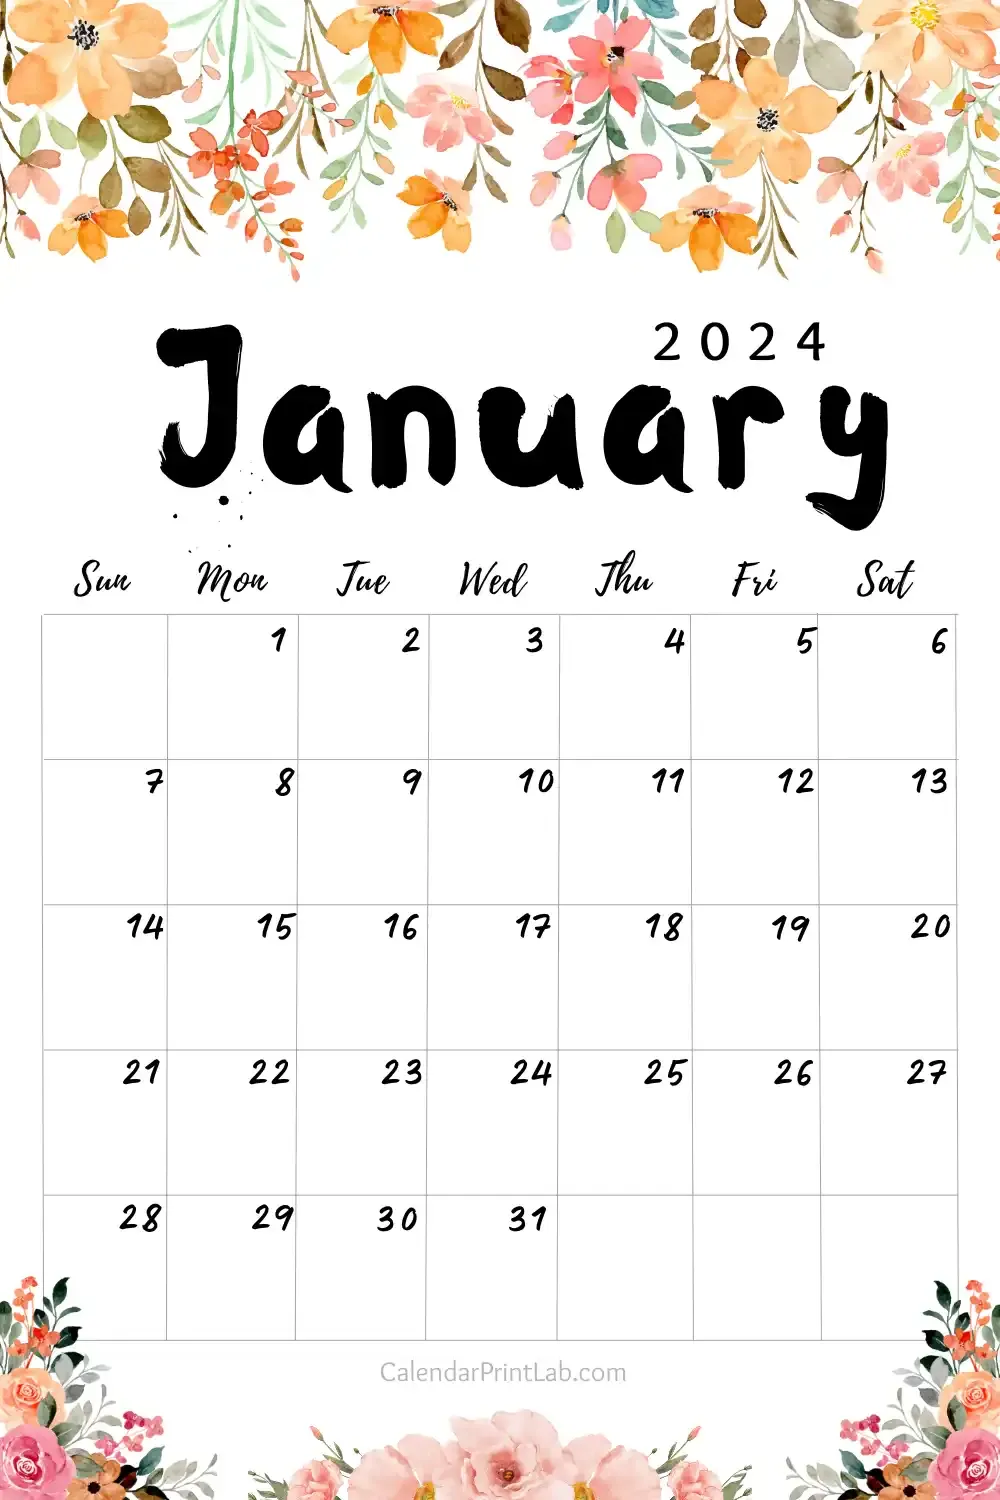 January 2024 Calendar Floral Design